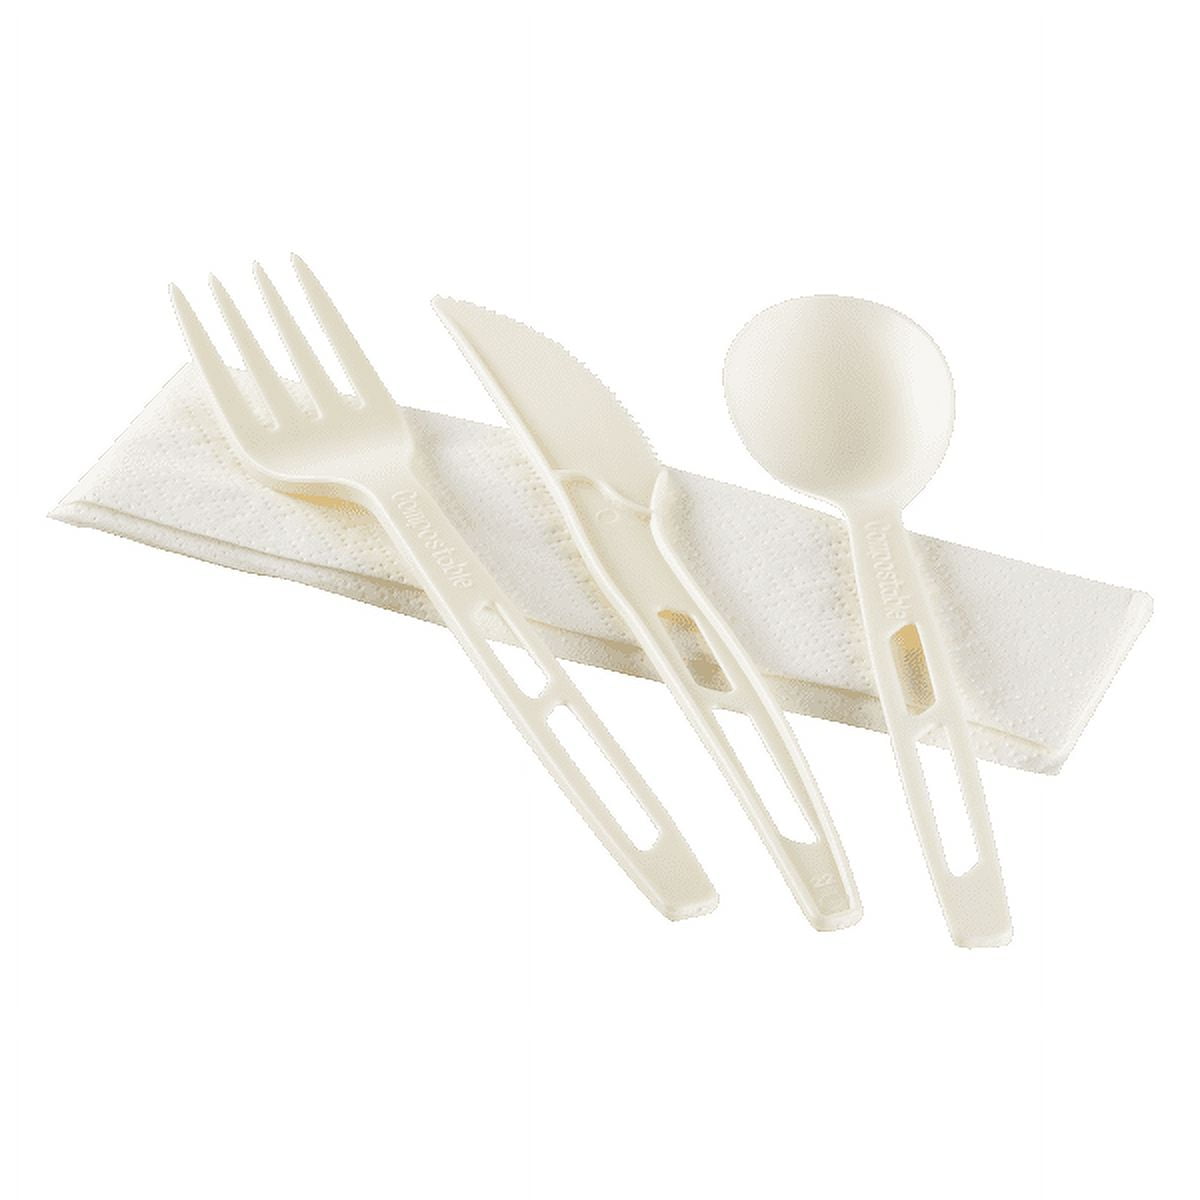 Hefty Clear Plastic Cutlery Combo Pack (360 ct.) - Sam's Club